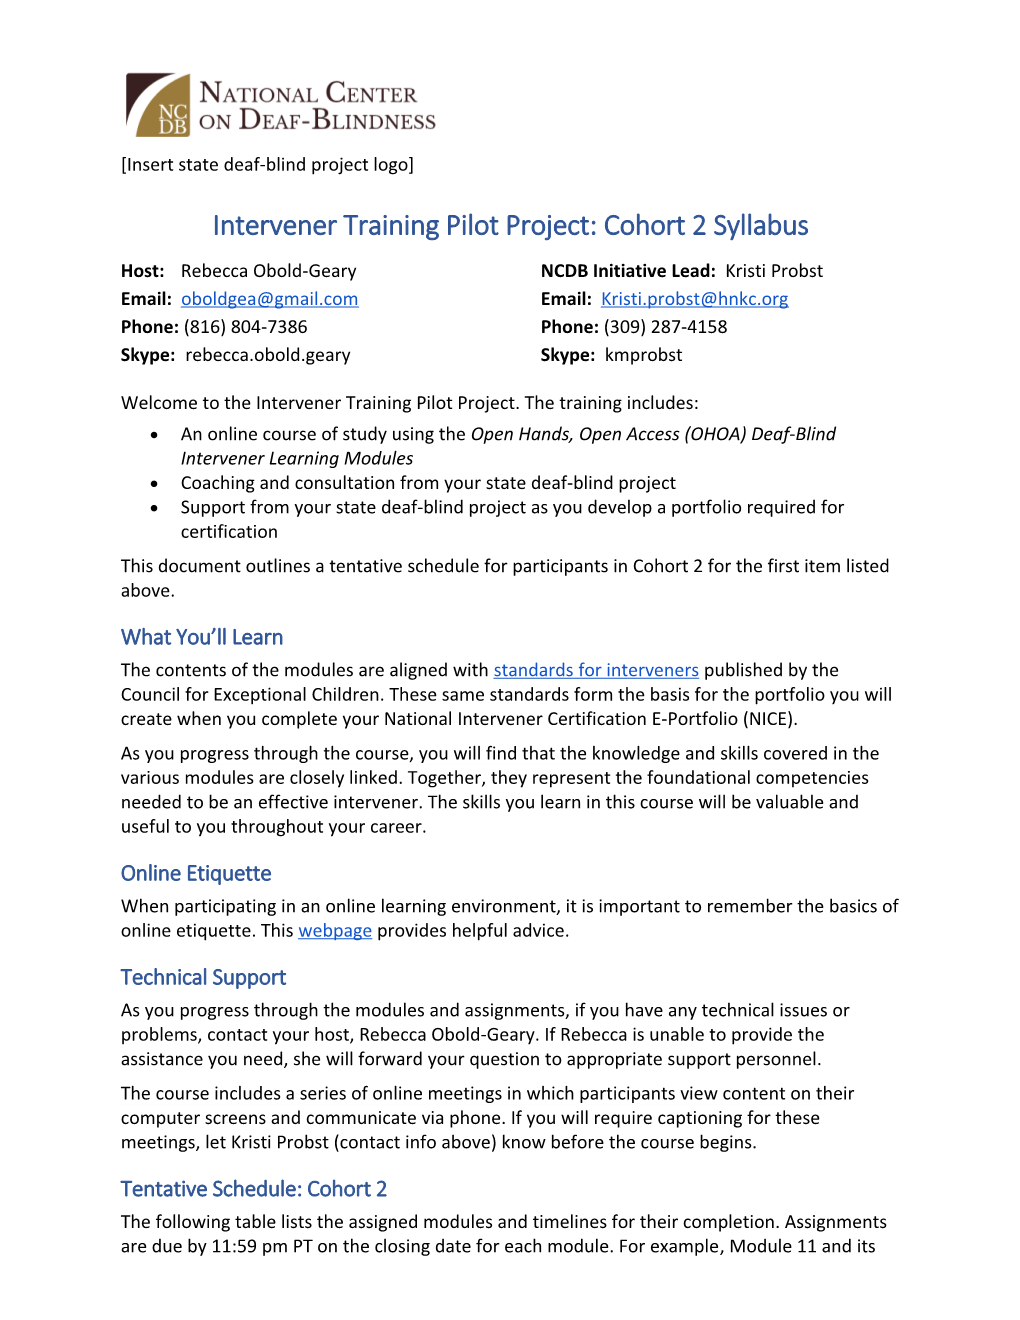 Intervener Training Pilot Project: Cohort 2 Syllabus